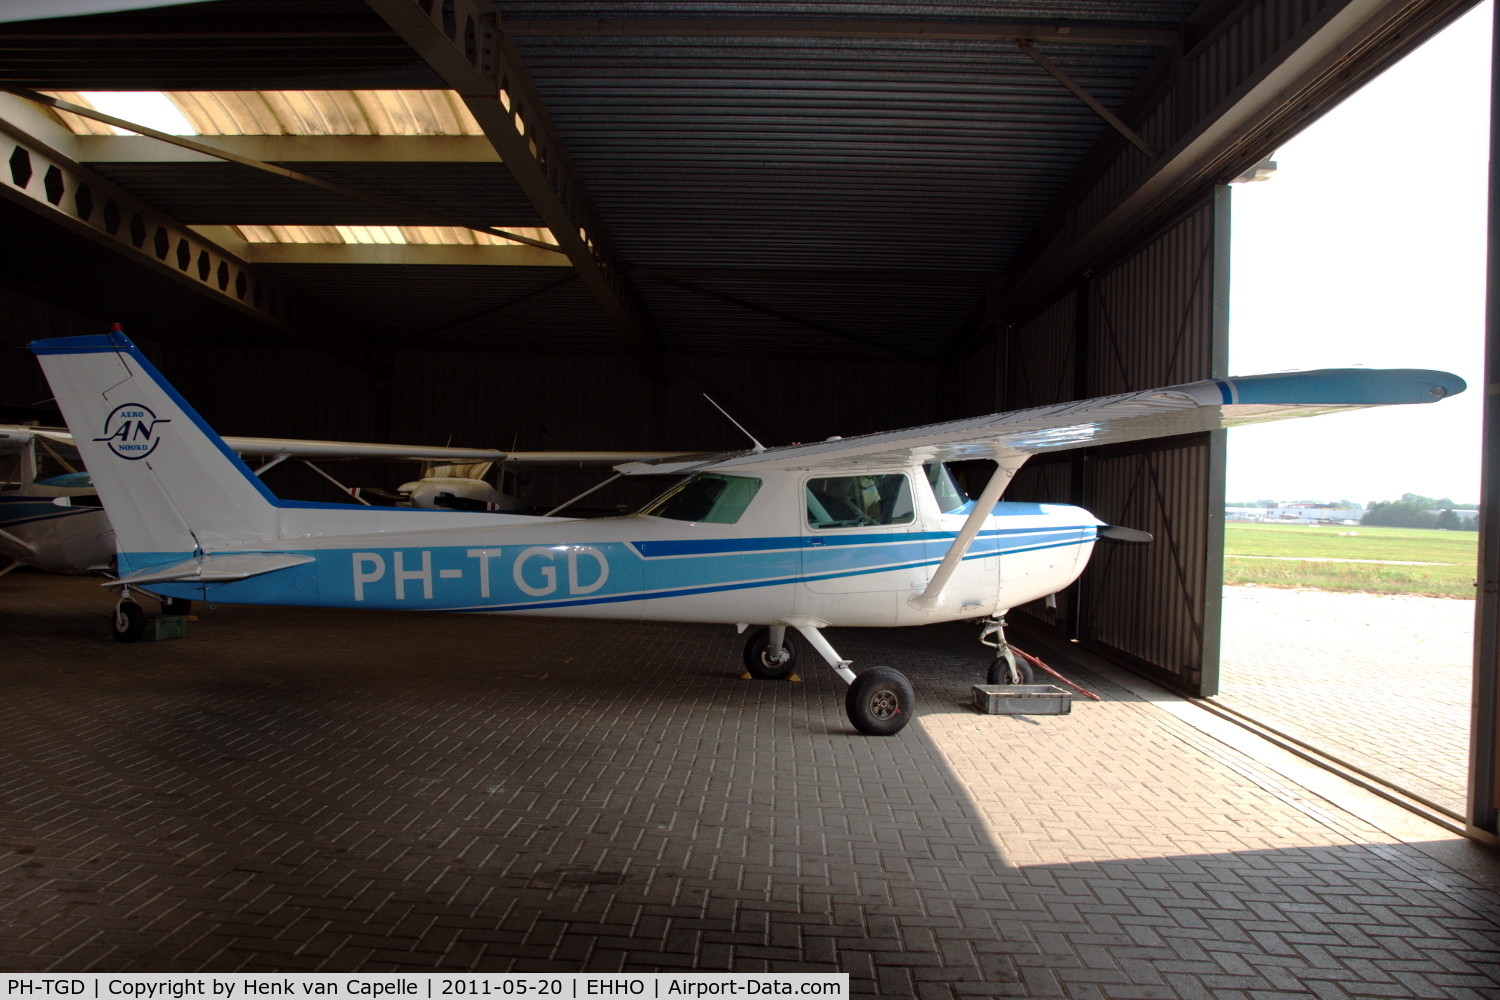 PH-TGD, Cessna 152 C/N 15285960, Cessna 152 inside rthe Aero Noord hangar at Hoogeveen airfield.